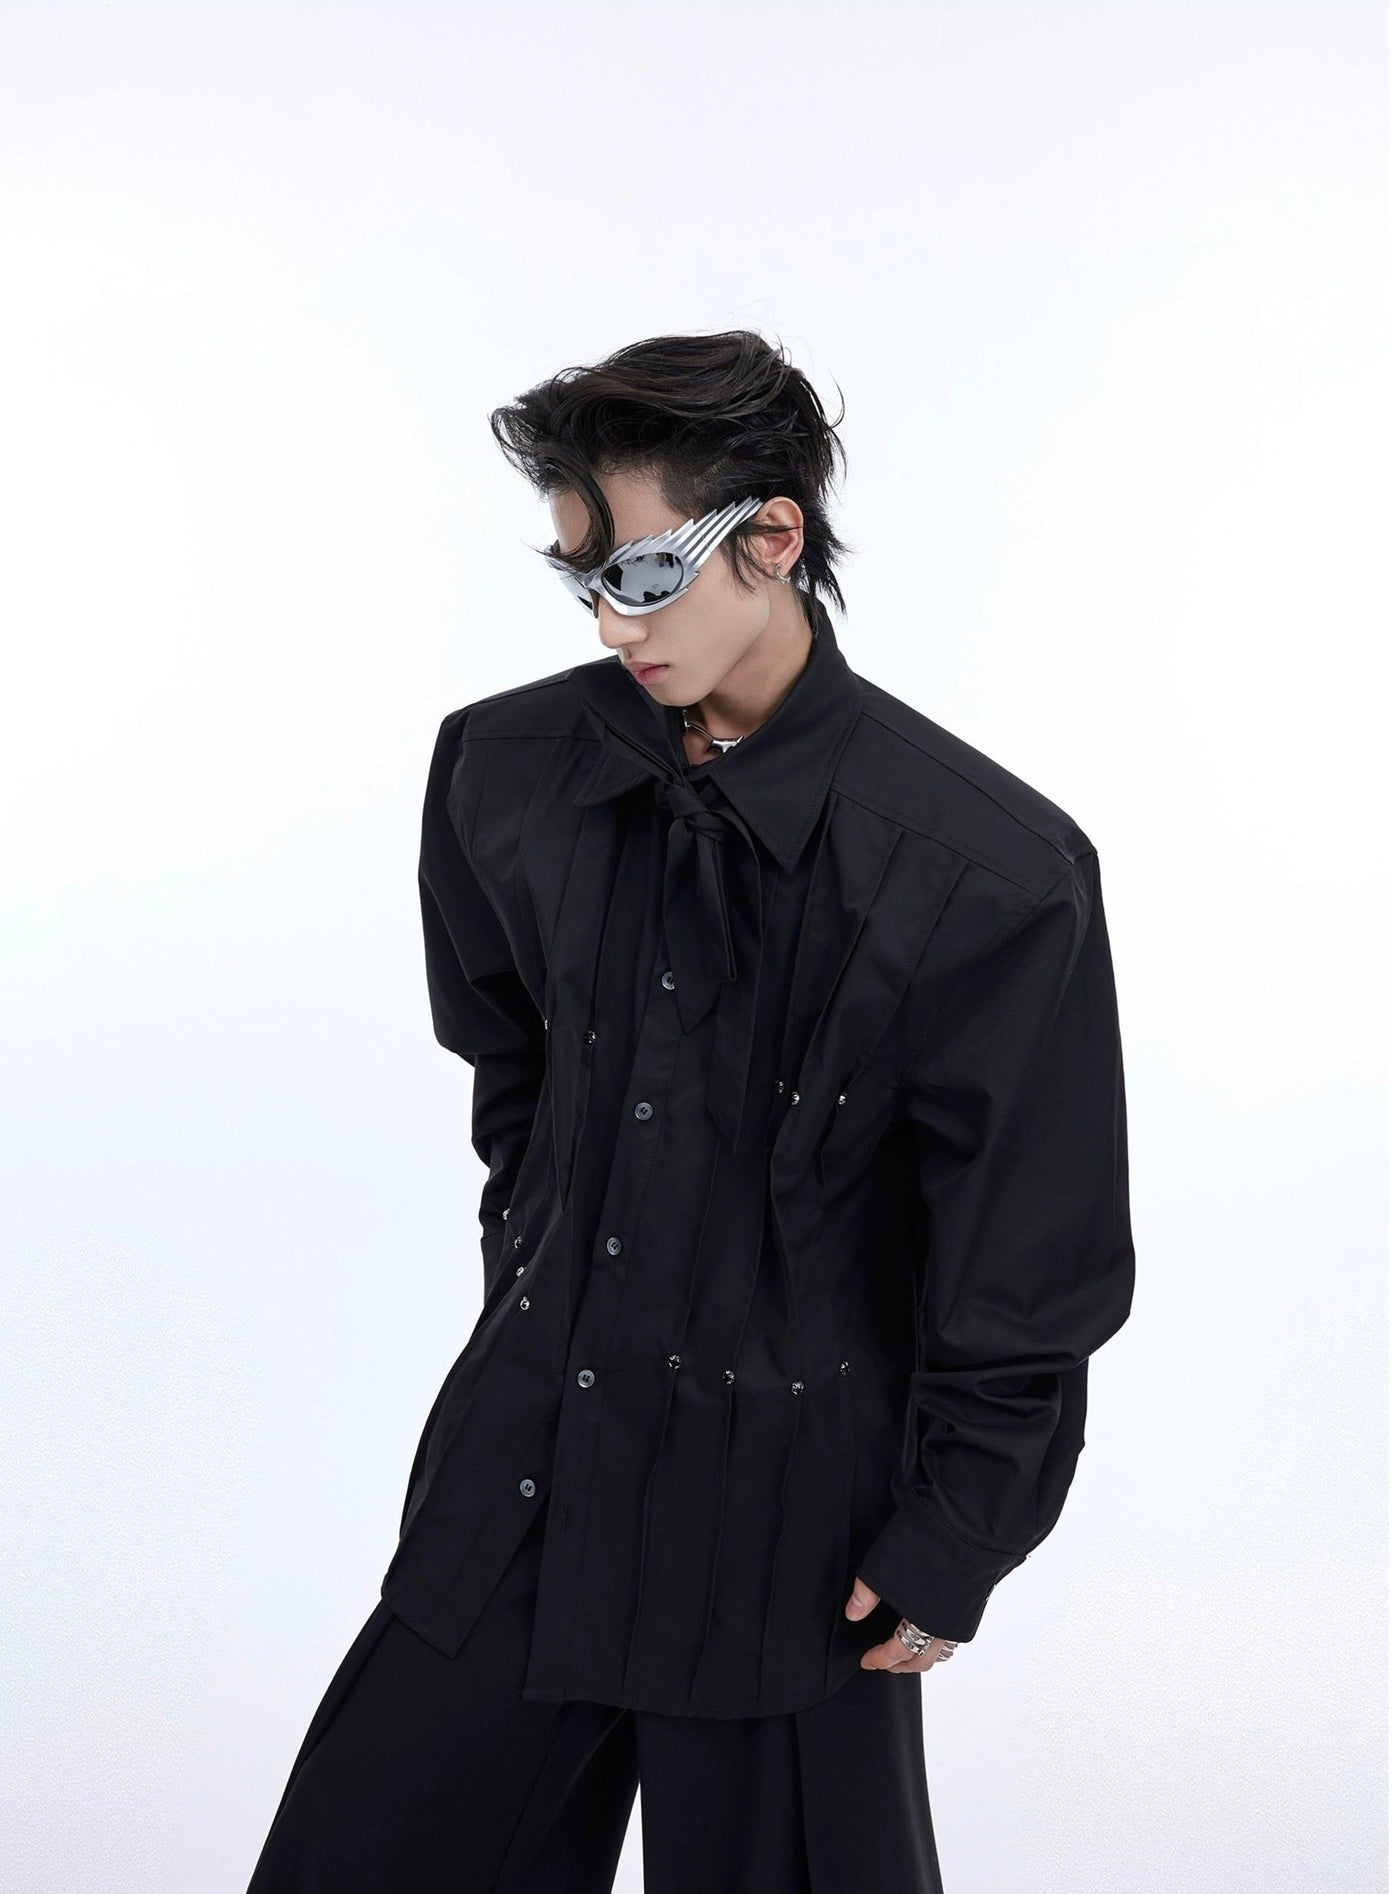 Neck Ribbon Buttoned Shirt Korean Street Fashion Shirt By Argue Culture Shop Online at OH Vault